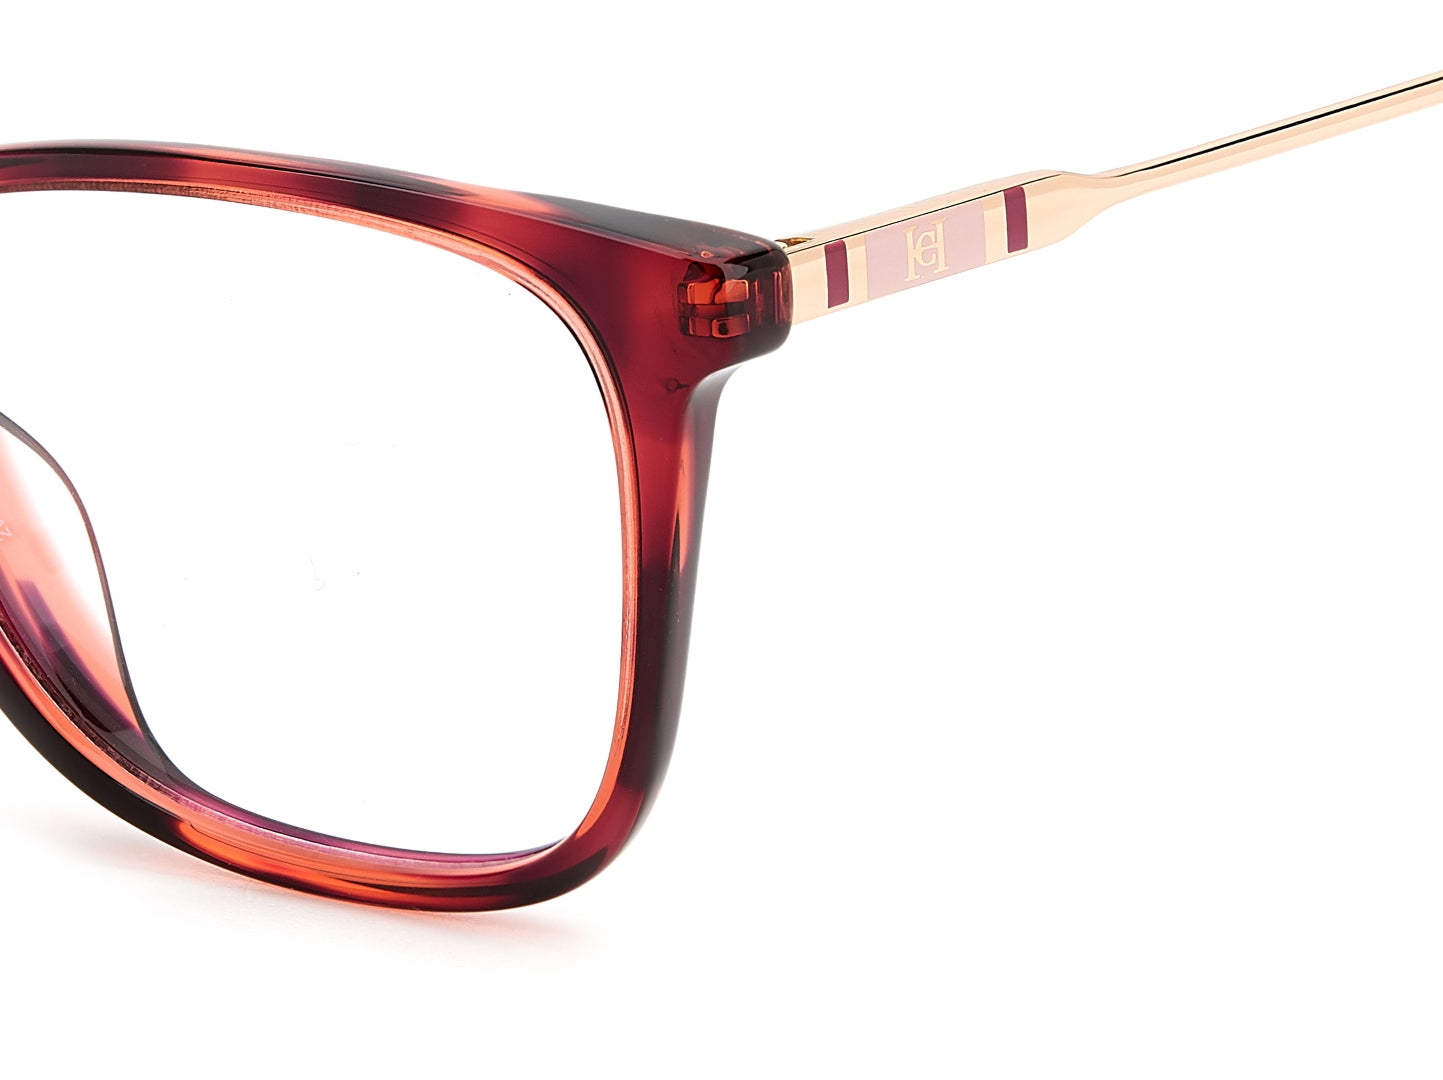 Carolina Herrera Woman Rectangular Eyeglasses